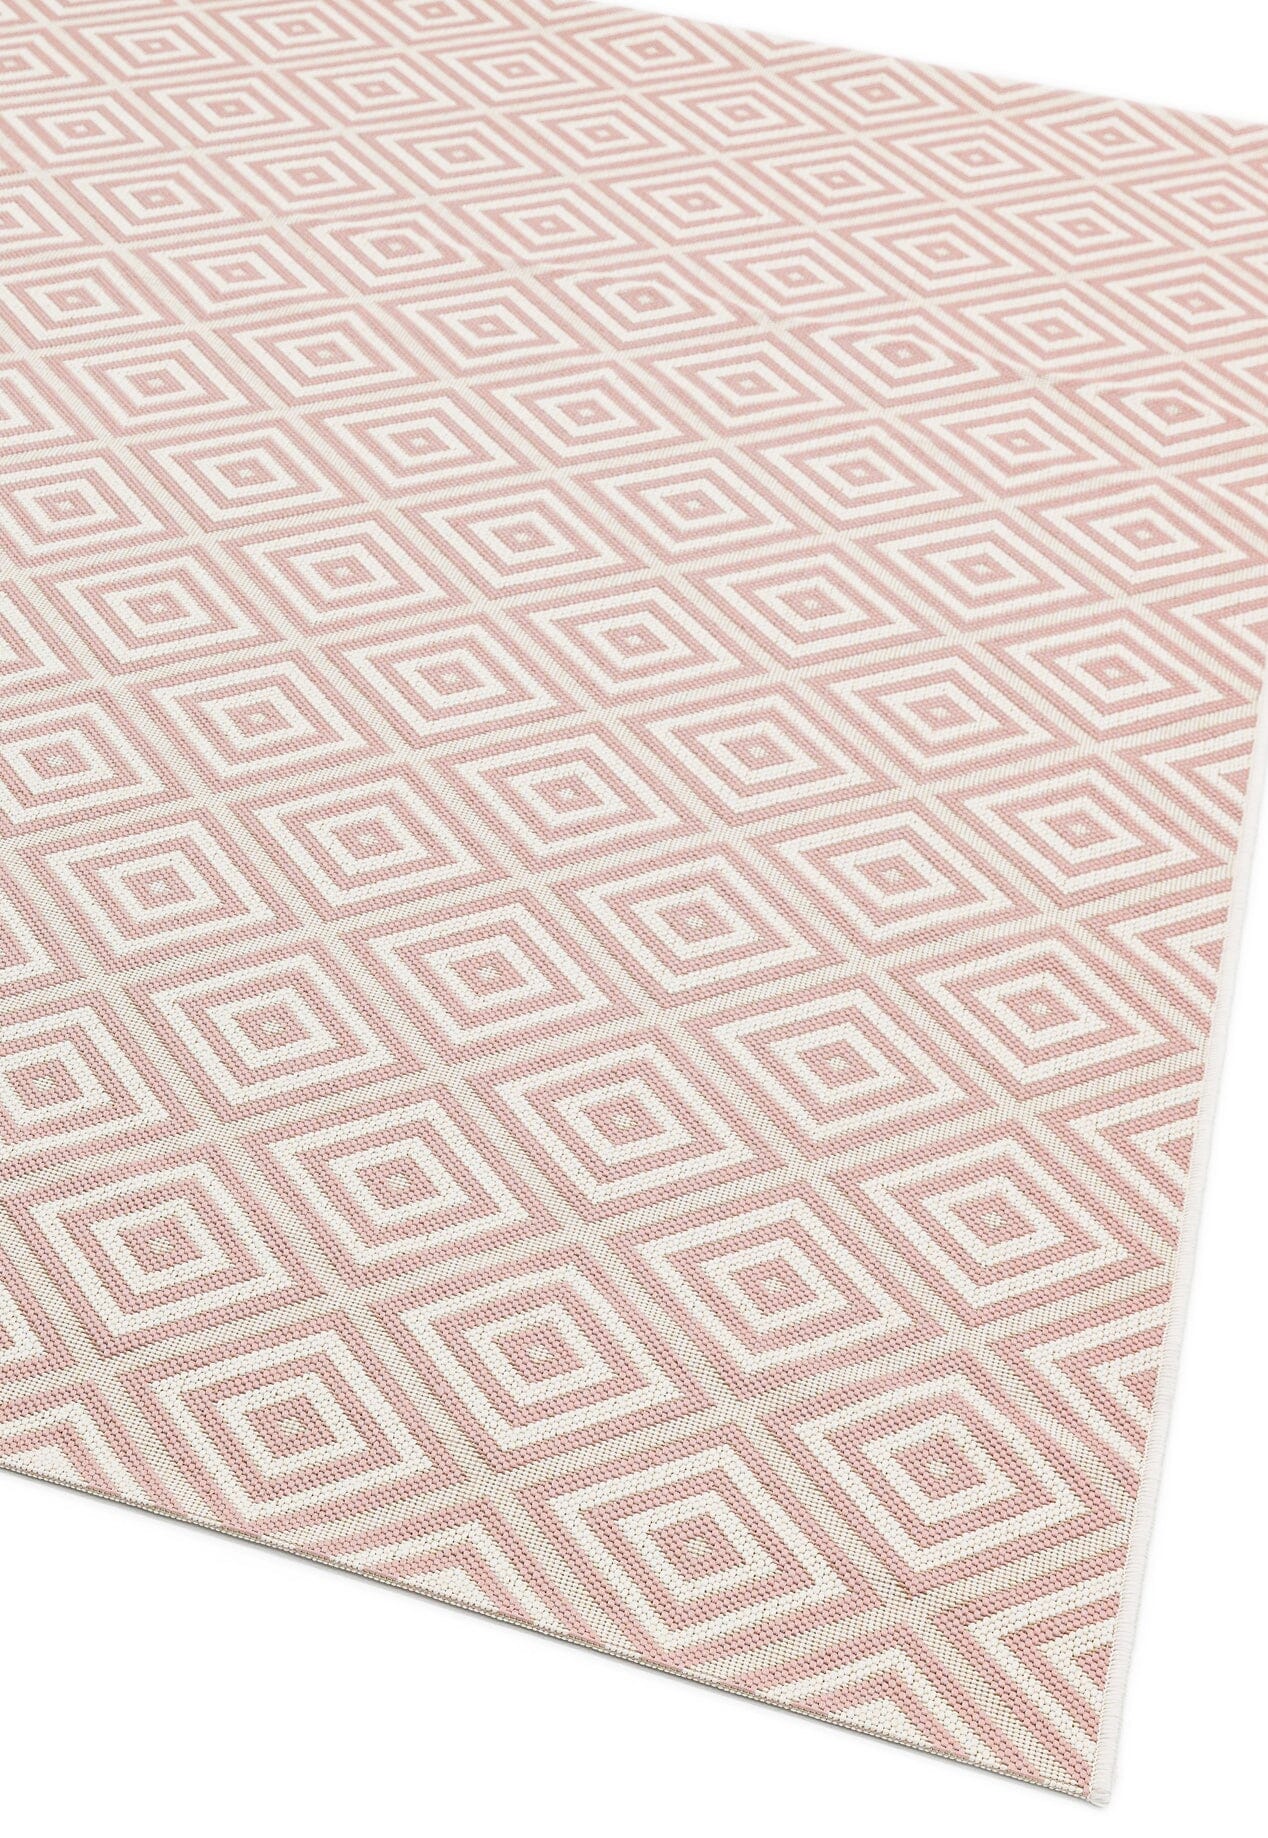  Asiatic Carpets-Asiatic Carpets Patio Machine Woven Rug Pink Jewel - 120 x 170cm-Pink 509 